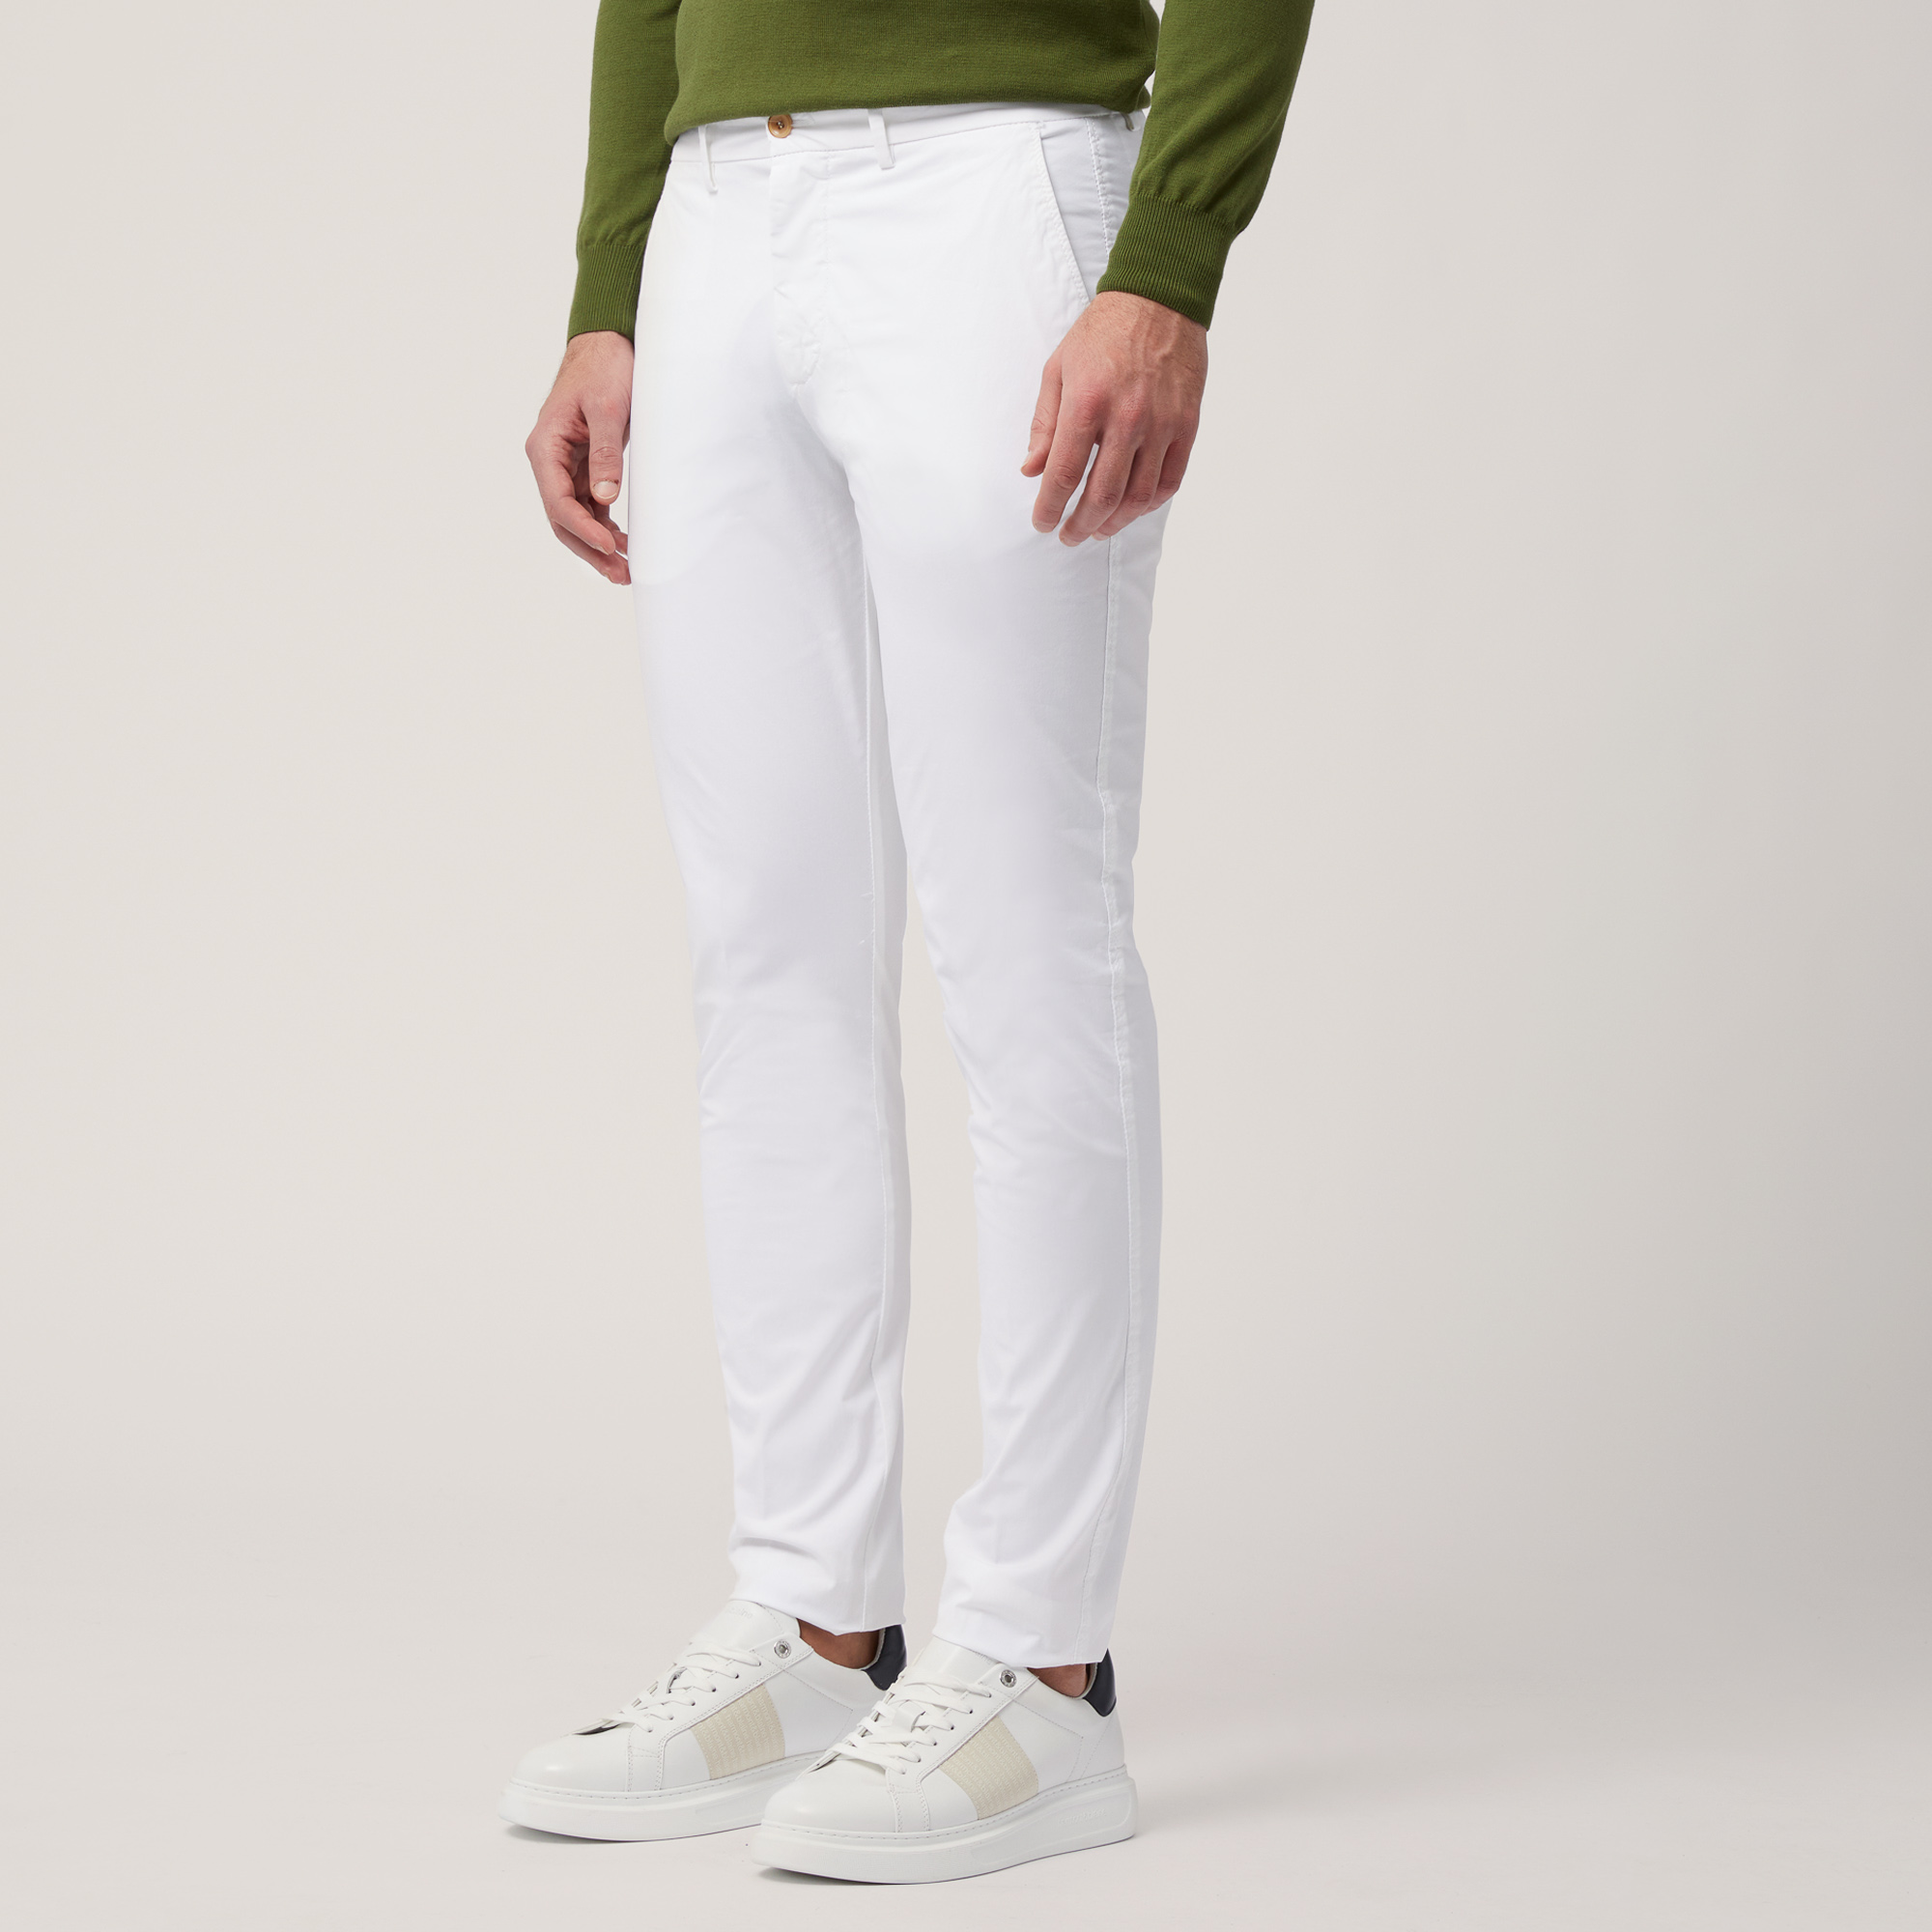 Narrow Fit Chino Pants, White, large